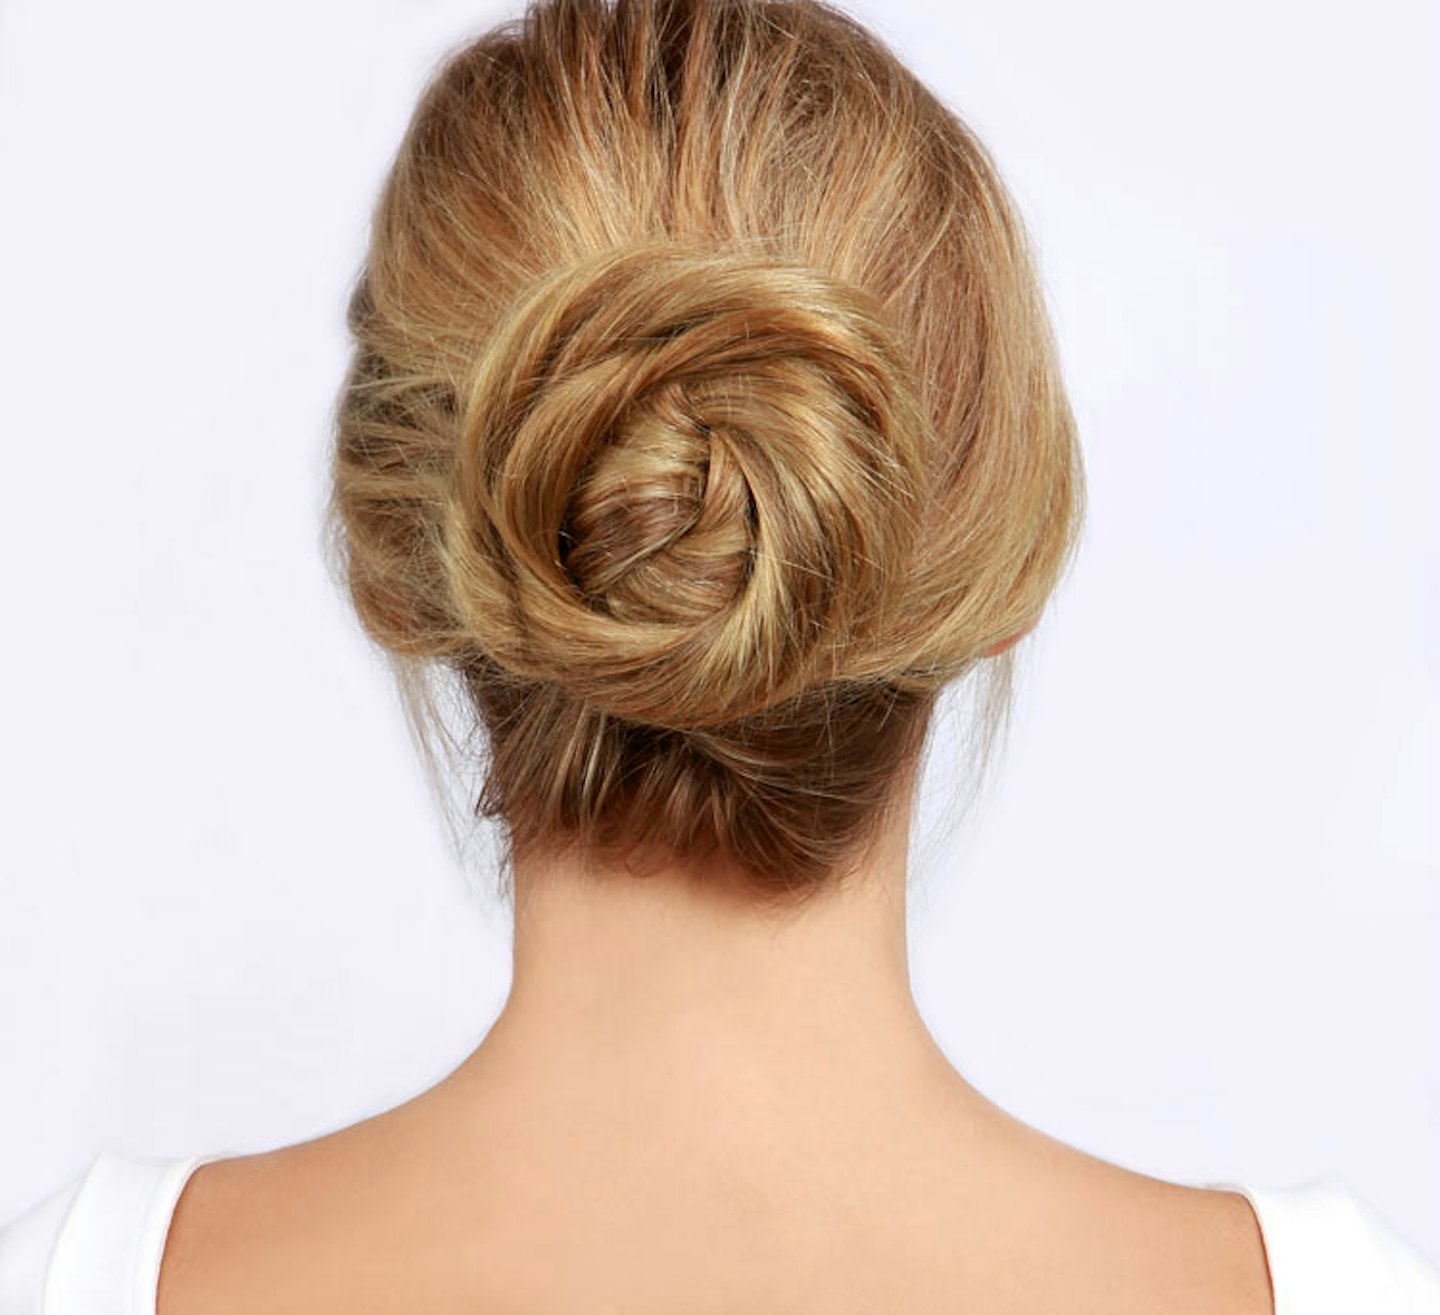 Twisted-bun-Grazia-long-hair-updo-tutorial-Pinterest-tutorial-Lulus.com